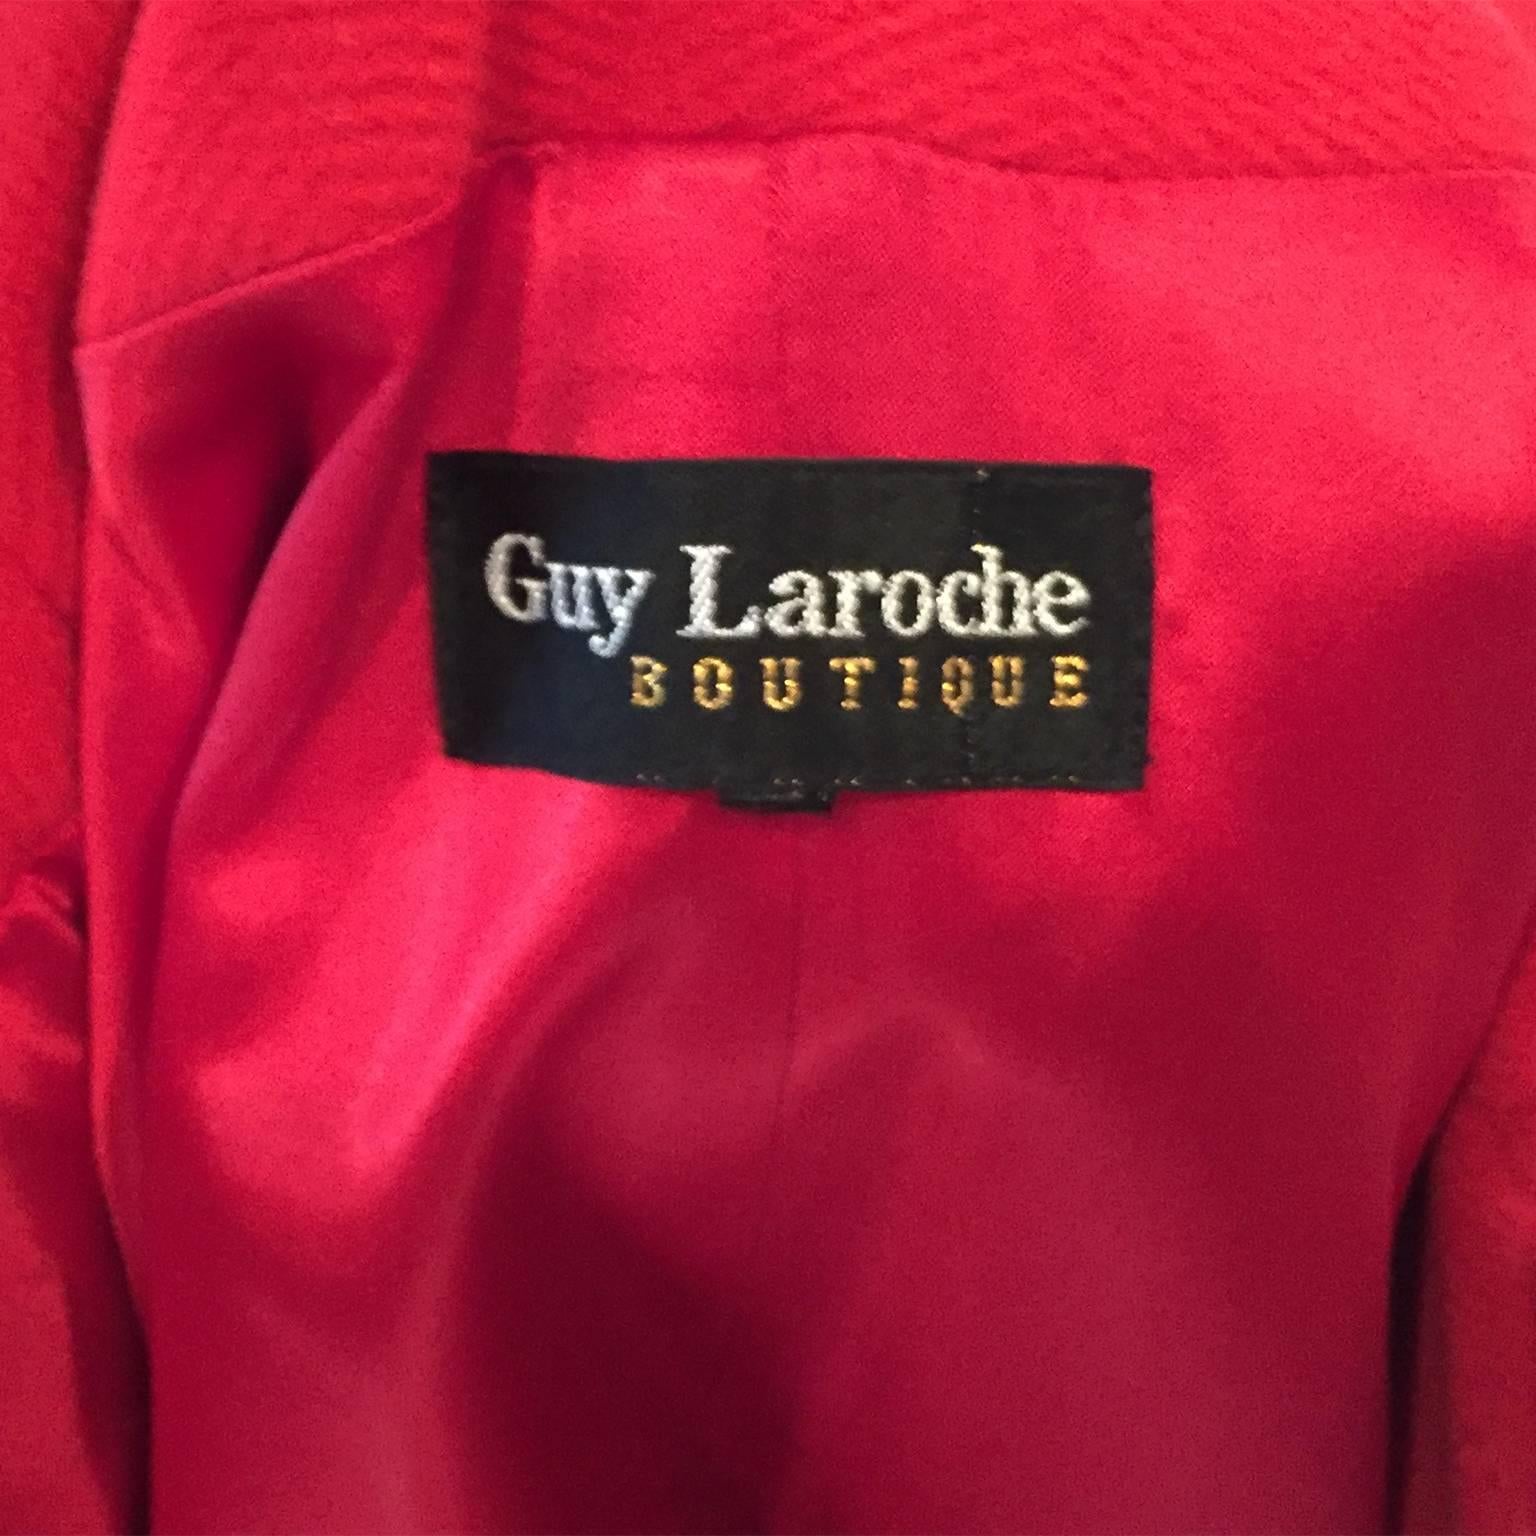 Guy Laroche Boutique 1980s Vintage Coat in Cherry Red Wool W Dolman Sleeves 3